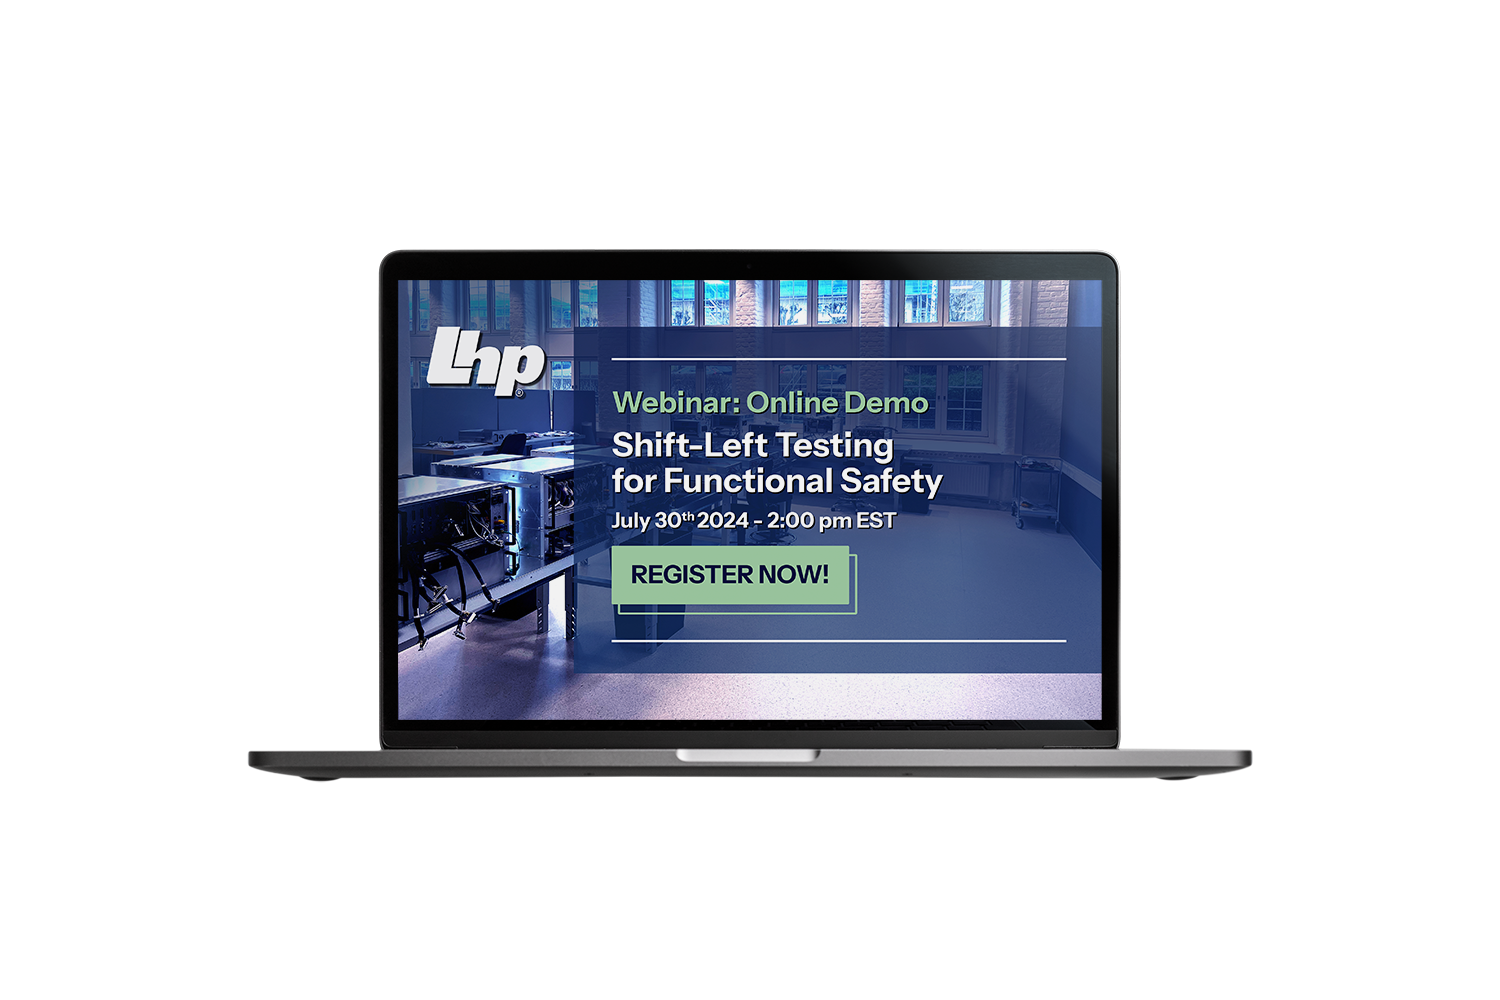 LSS-Mockup-live-online-webinar-ALIARO-Shift-Left-Testing-for-Functional-Safety-03